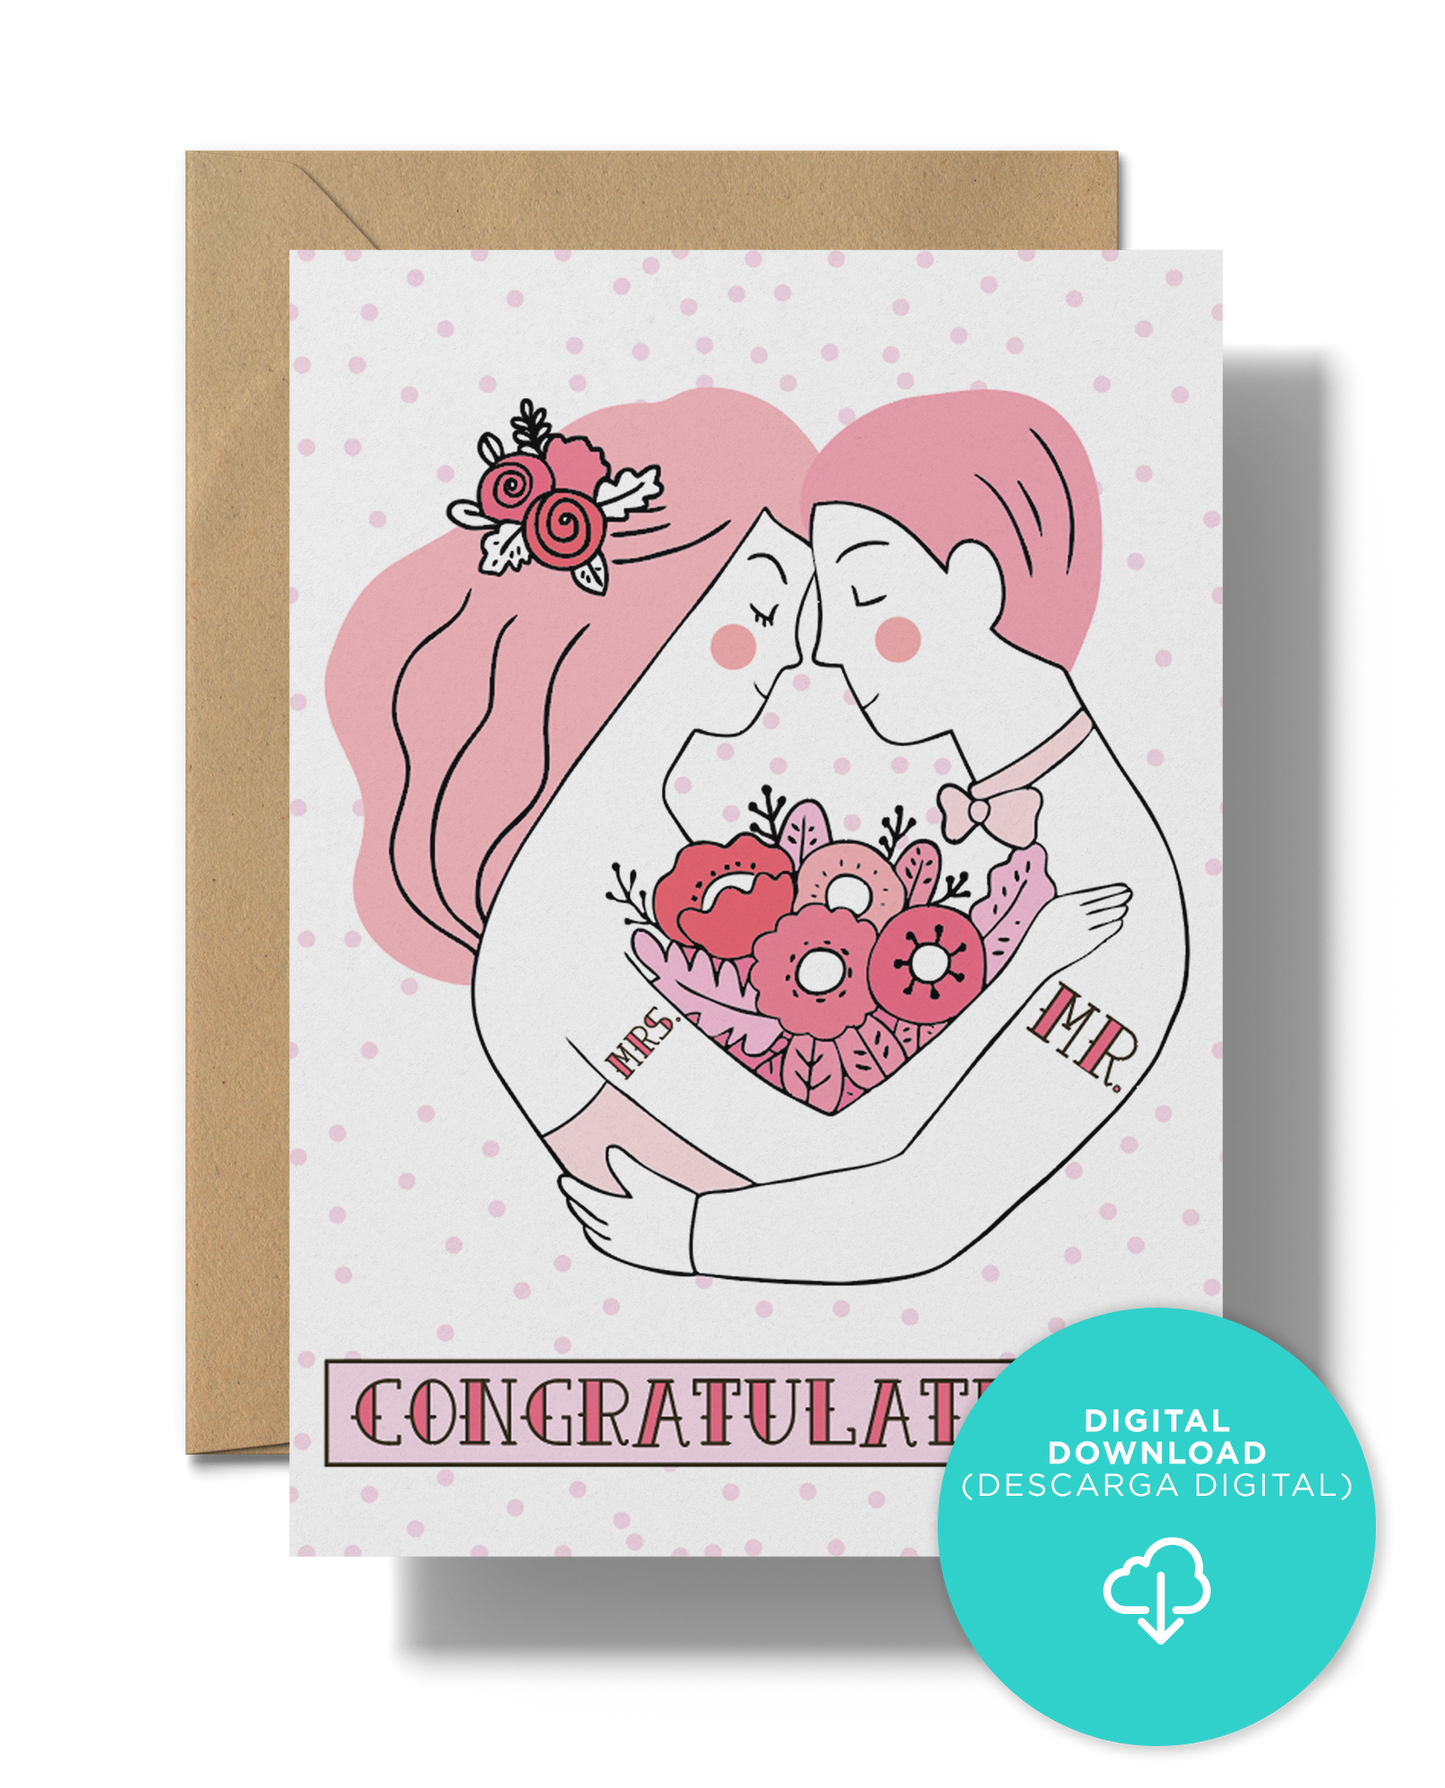 Congratulations Mr. & Mrs. | Instant Digital Download JPG